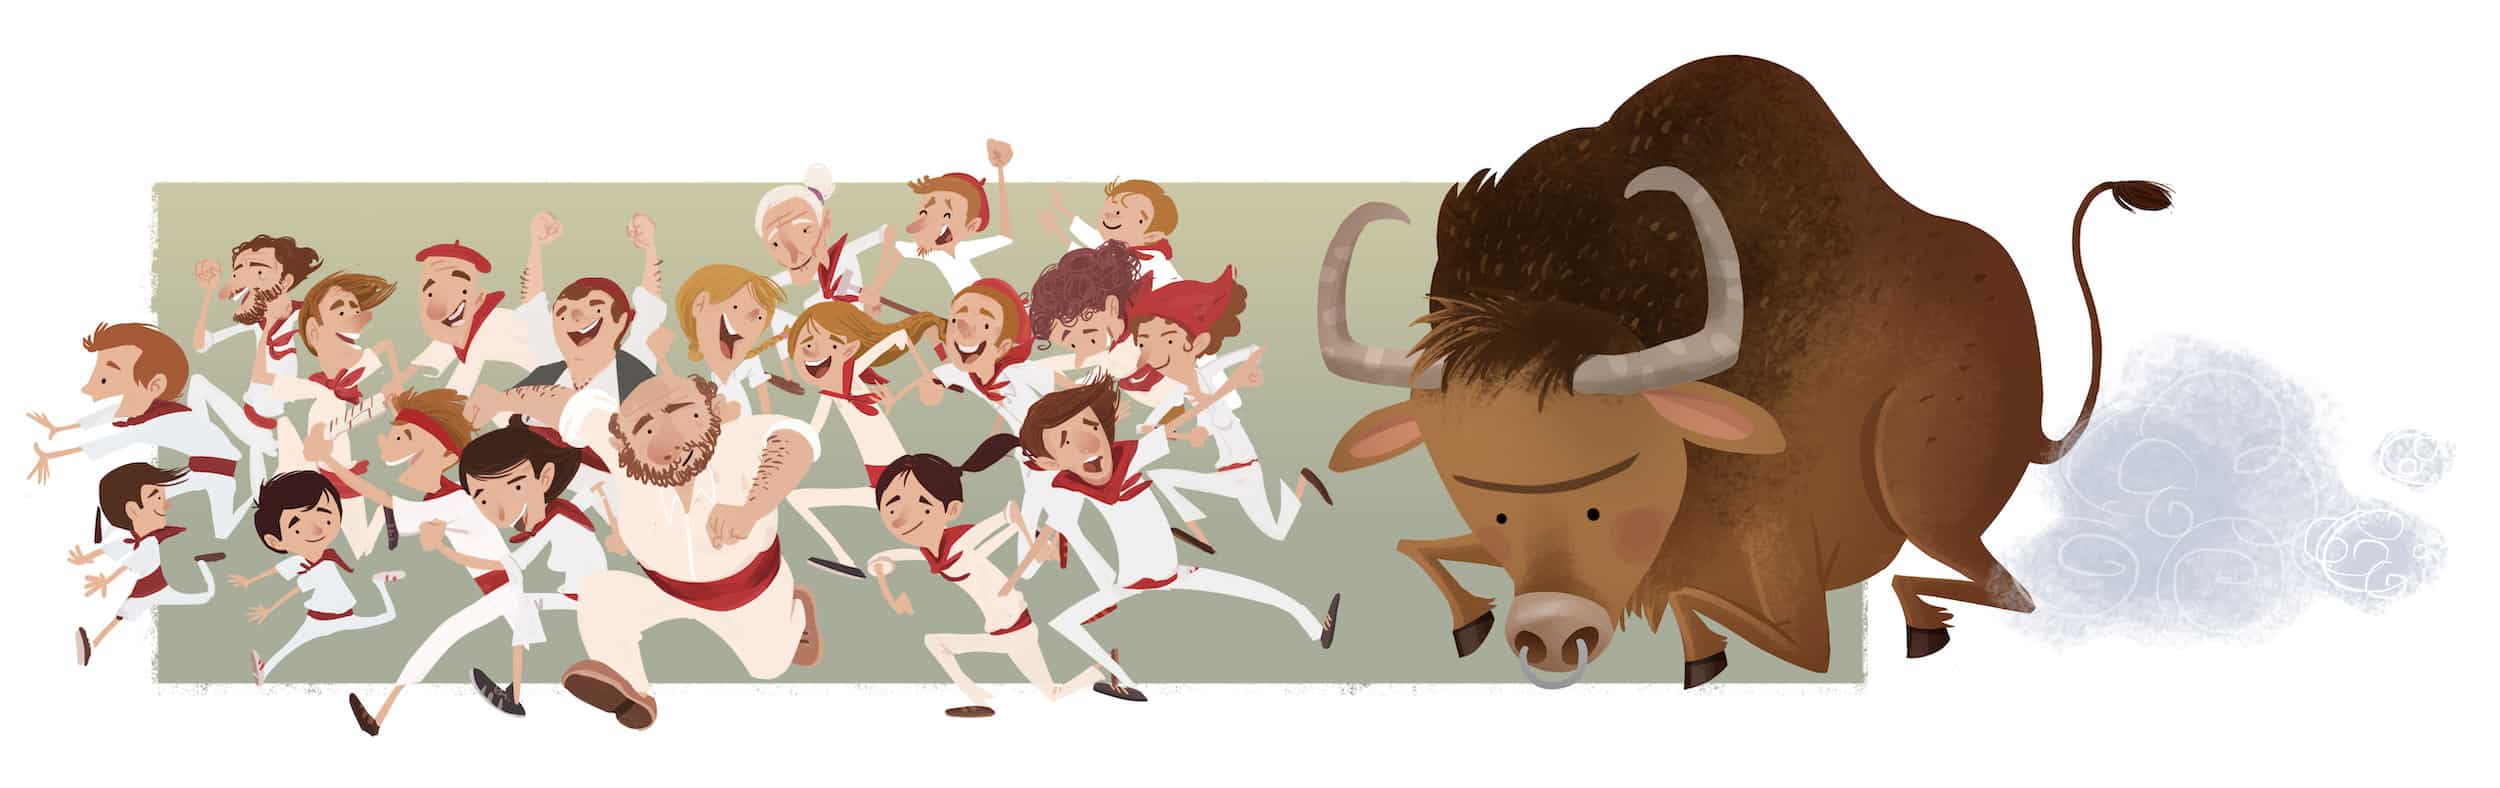 Running of the bulls to illustrate herd immunity